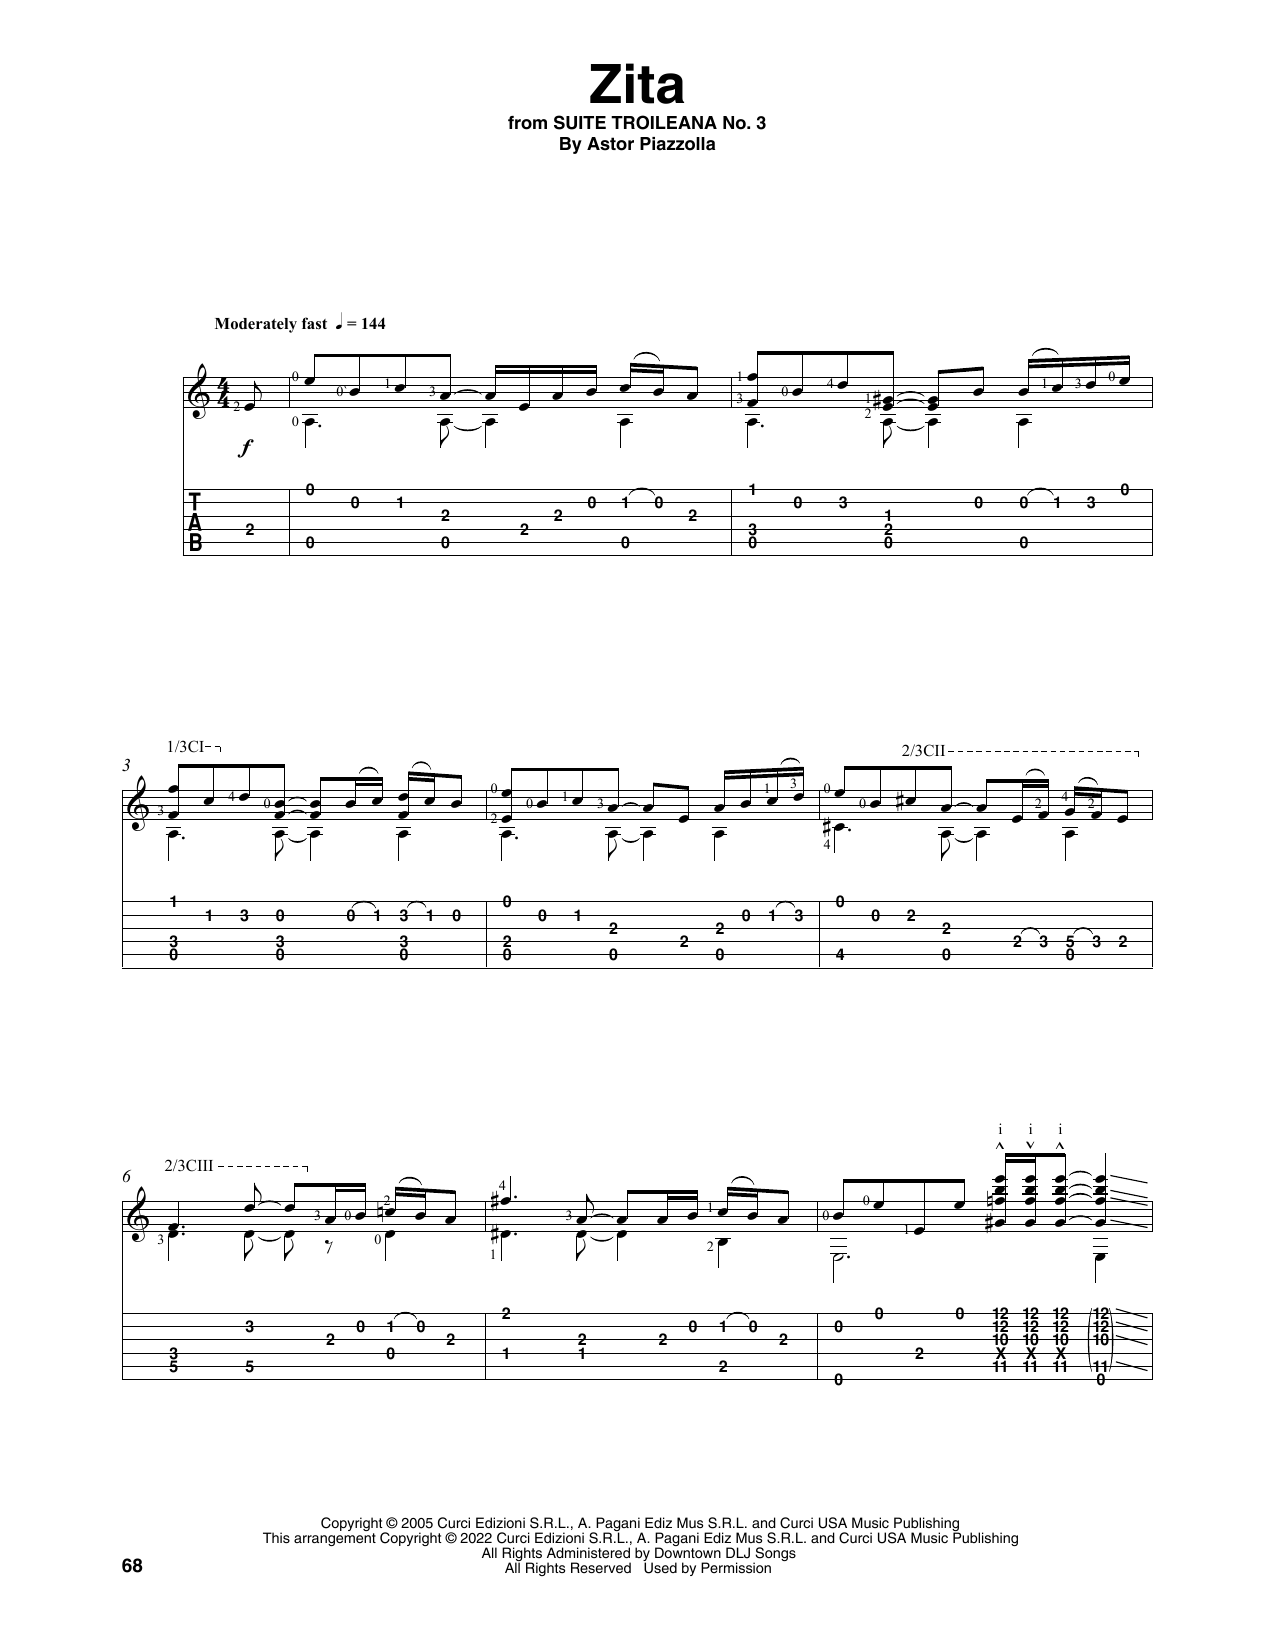 Astor Piazzolla Zita (arr. Celil Refik Kaya) Sheet Music Notes & Chords for Solo Guitar - Download or Print PDF